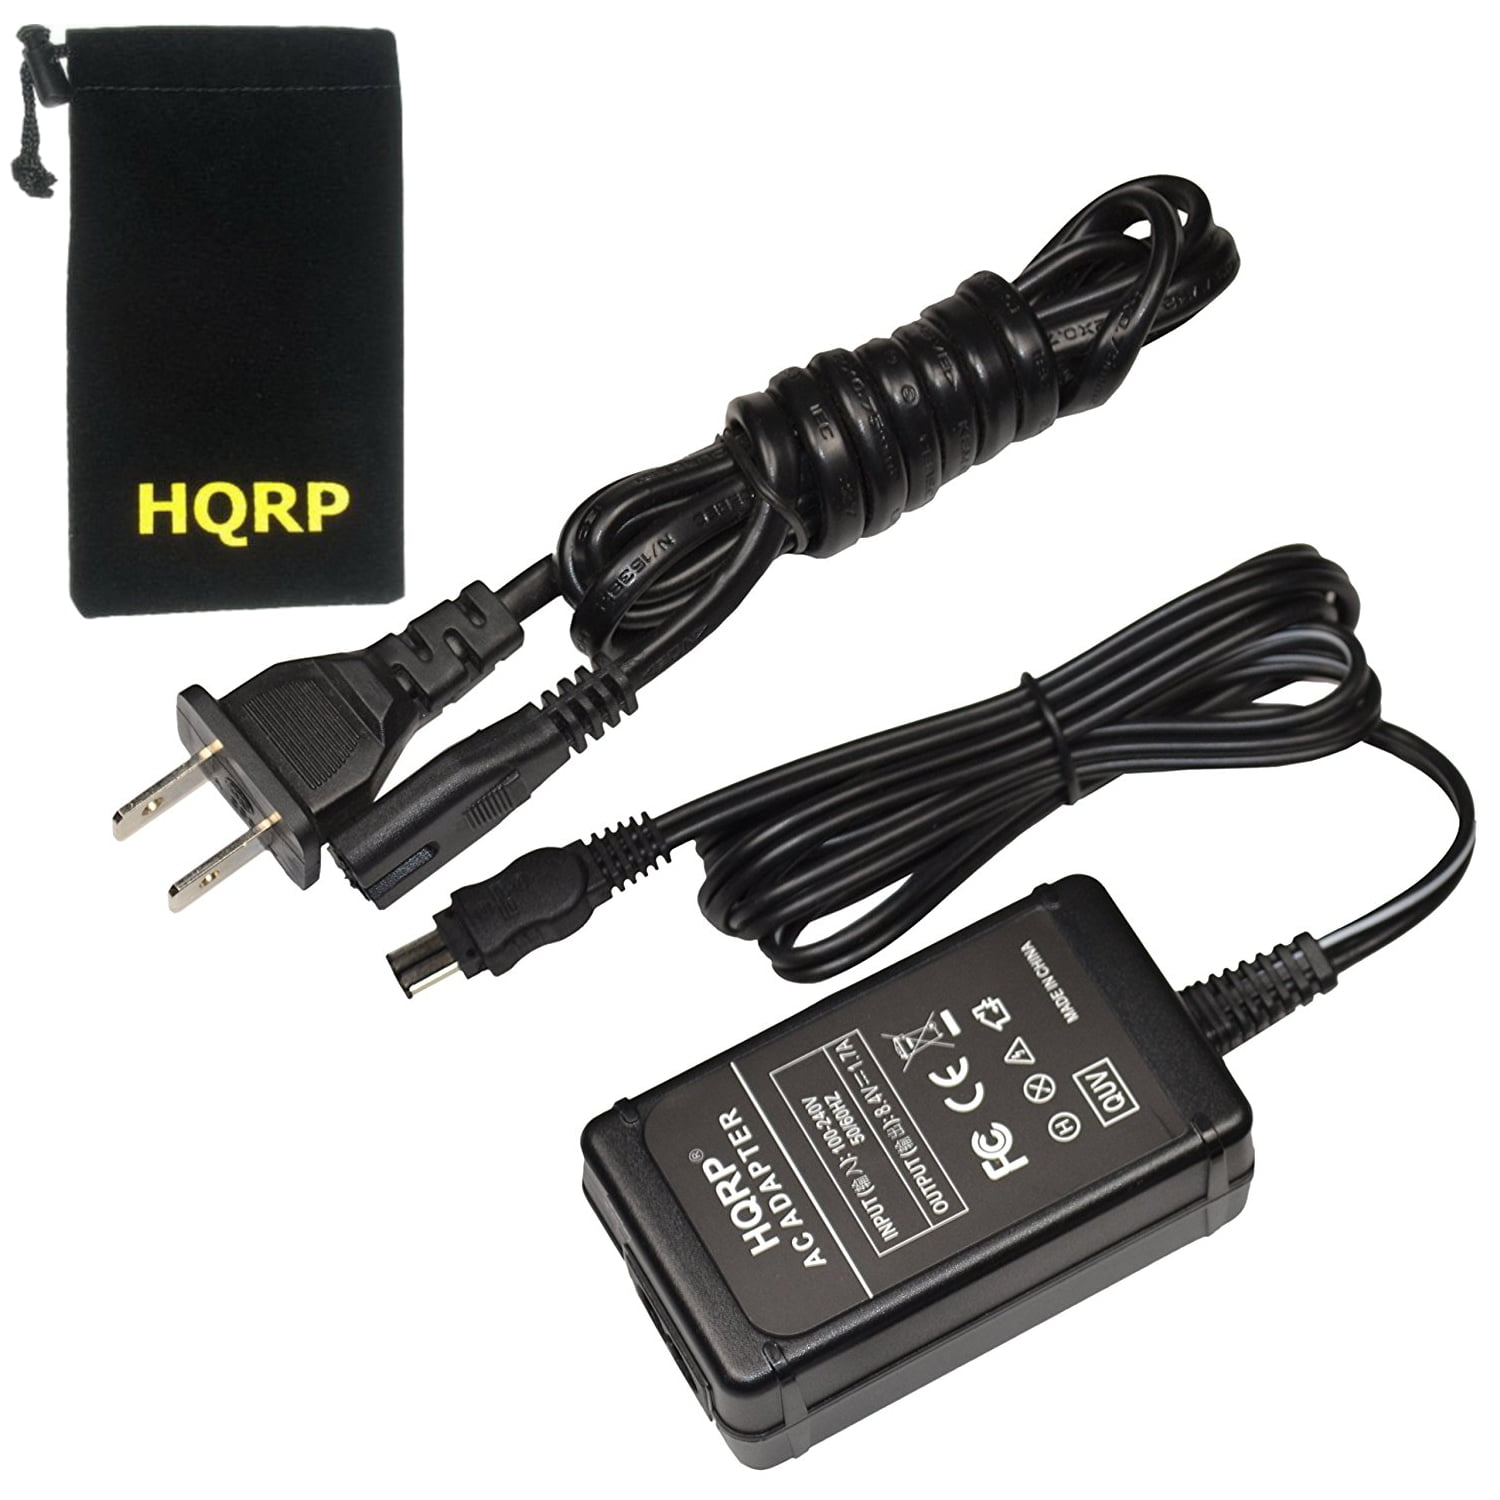 HQRP Replacement AC Power Adapter for AC-L10B / AC-L10A / / AC-L10 Handycam CDD-TR CDD-TRV / DCR-TRV / DCR-DVD Series Camcorders HQRP Carrying Bag - Walmart.com